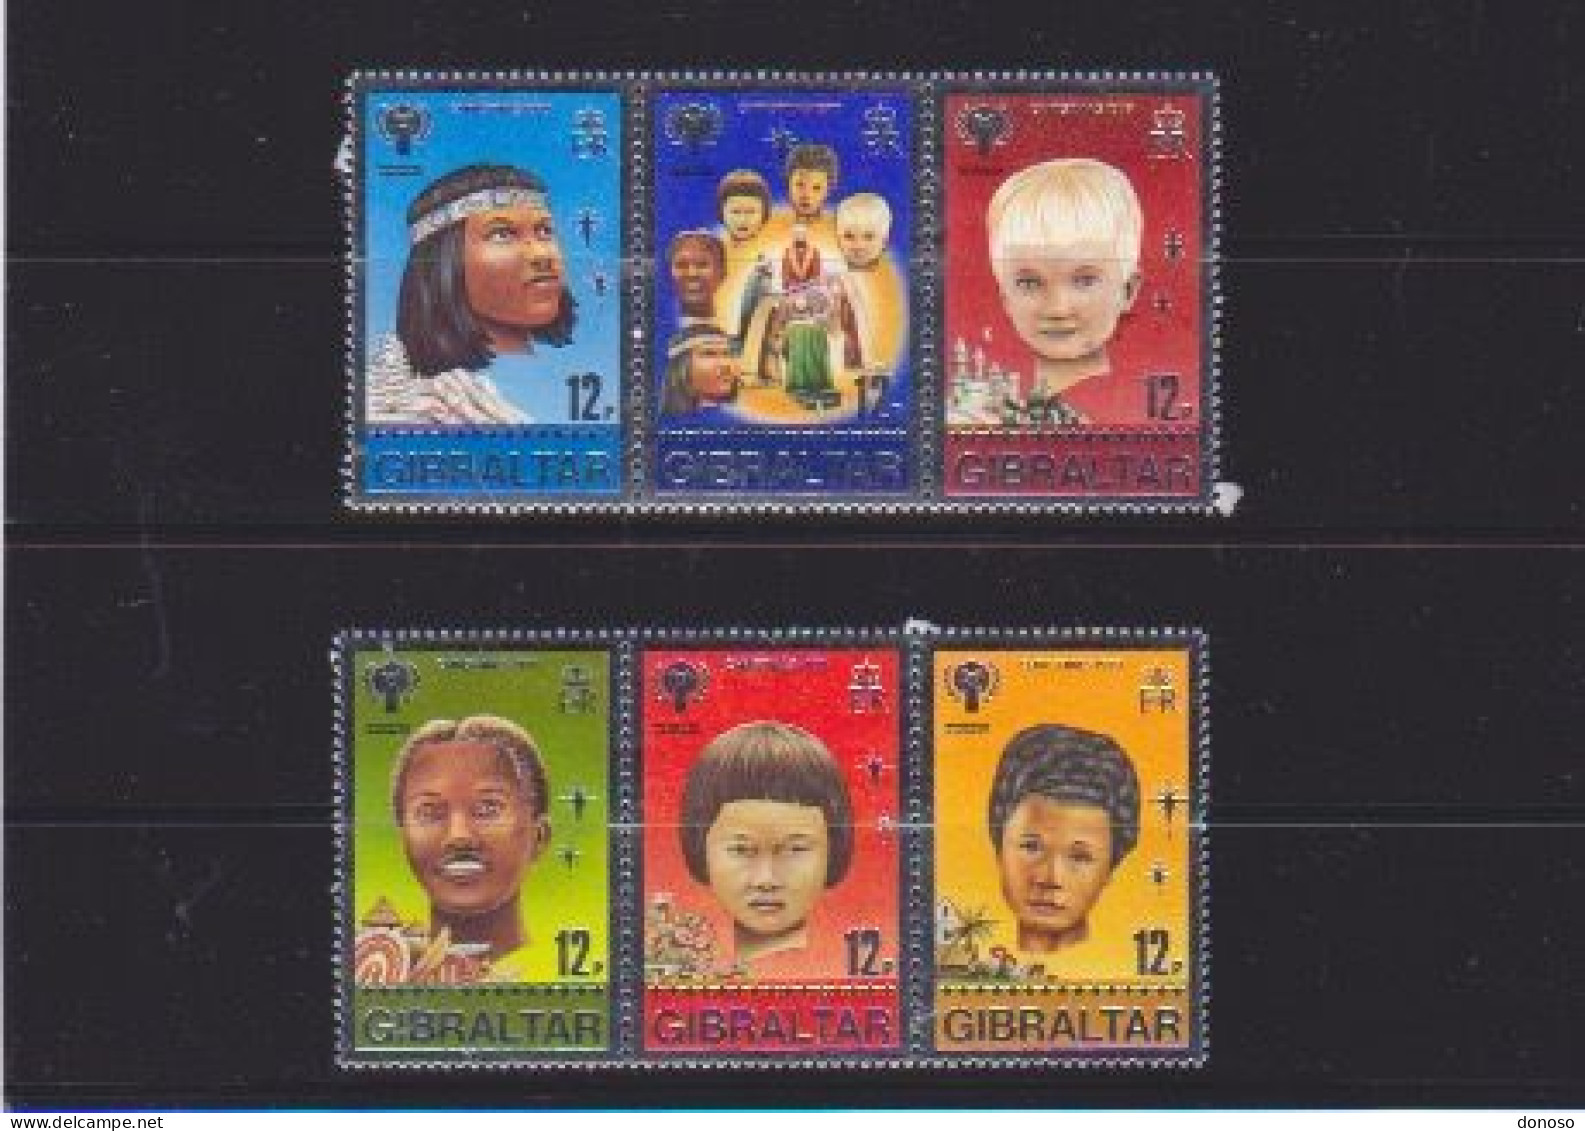 GIBRALTAR 1979 Année Internationale De L'enfant Yvert 397-402, Michel 395-400 NEUF** MNH Cote 3,60 Euros - Gibraltar